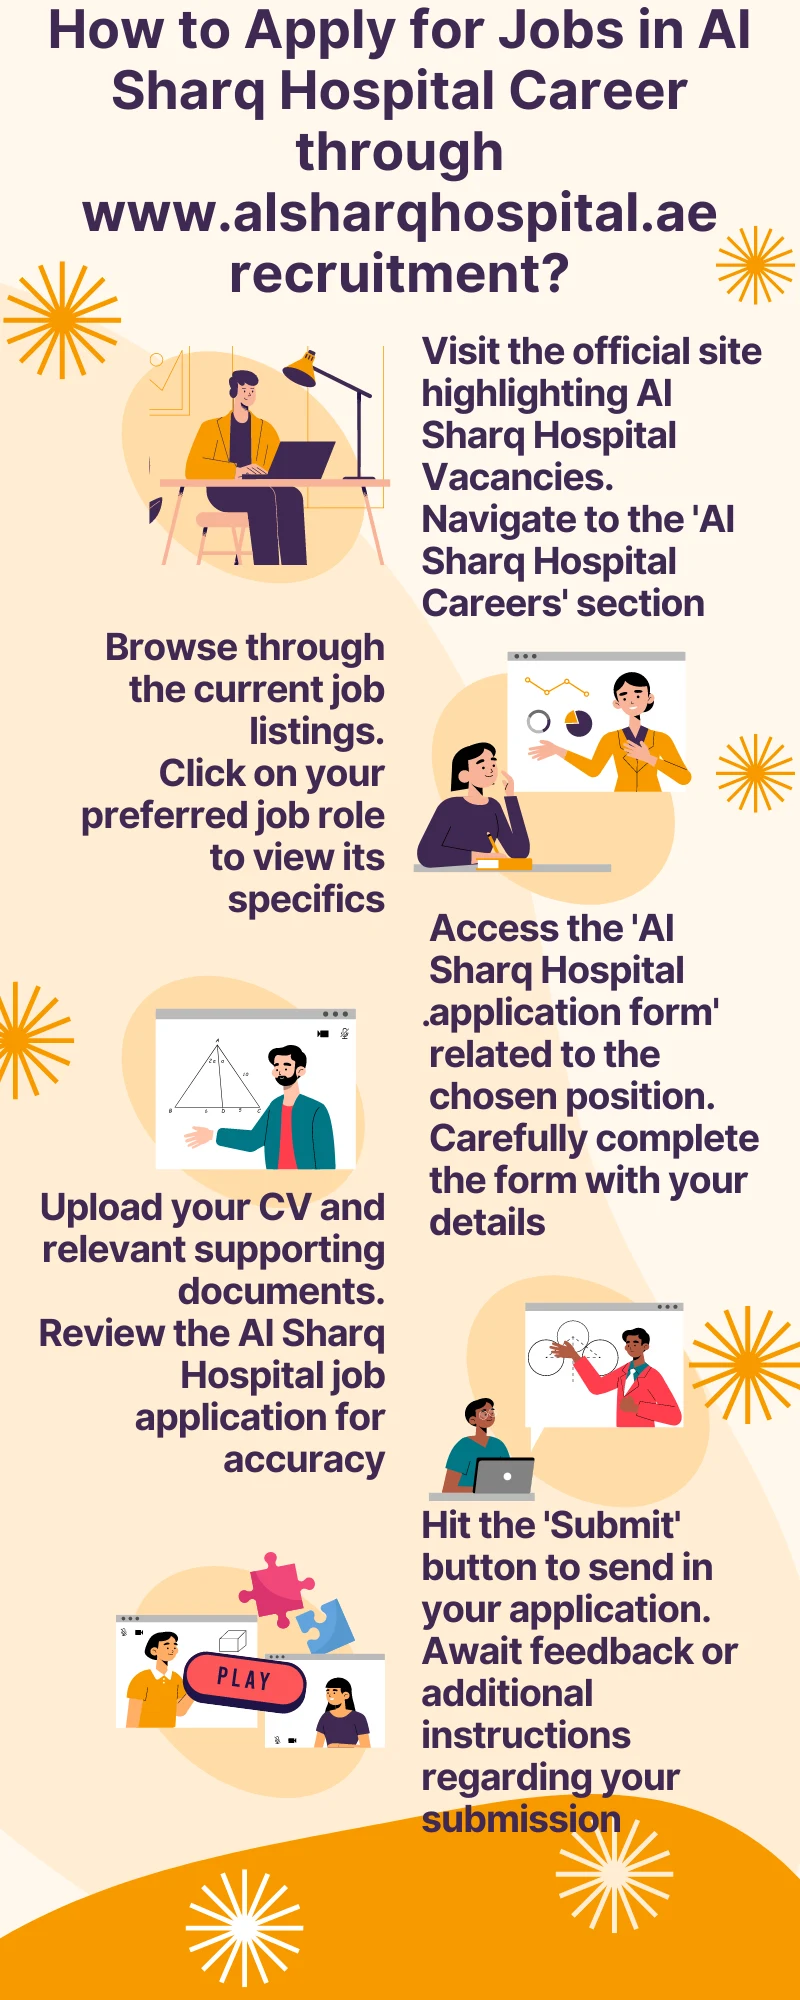 How to Apply for Jobs in Al Sharq Hospital Career through www.alsharqhospital.ae recruitment?